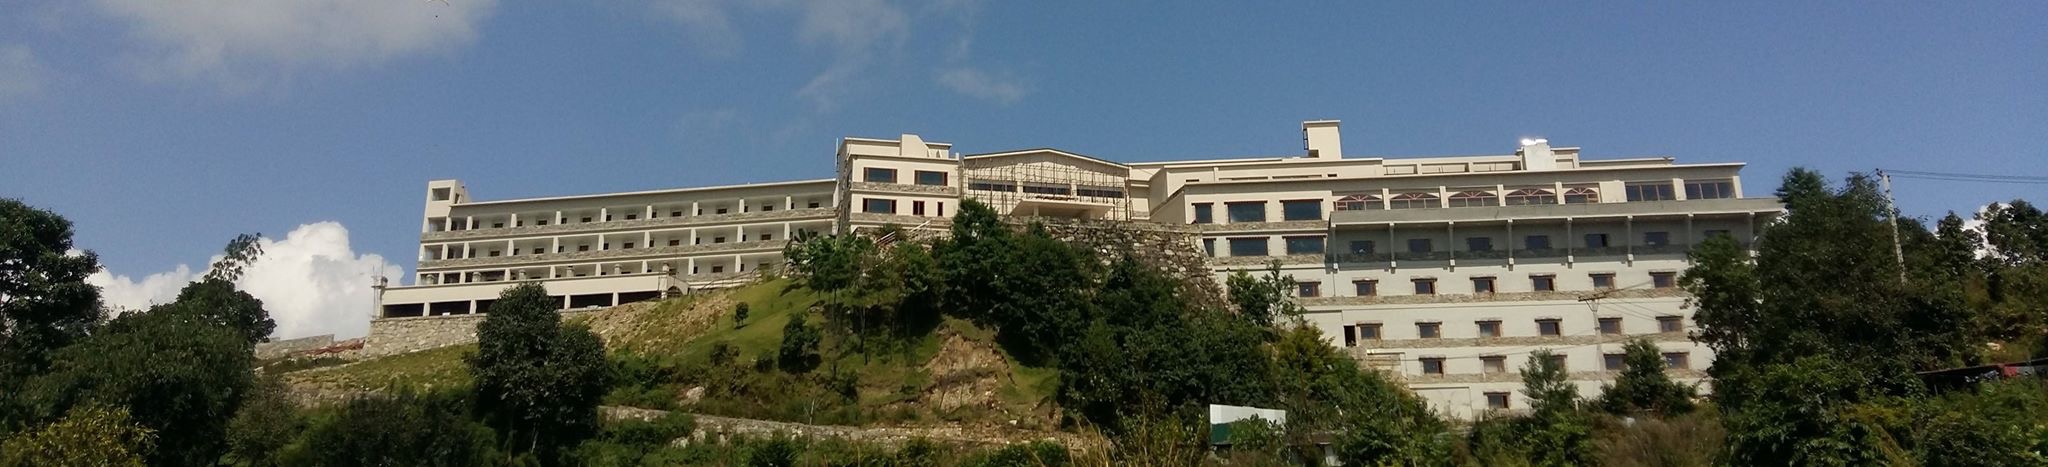 Pokhara HOTEL|ポカラ ホテル